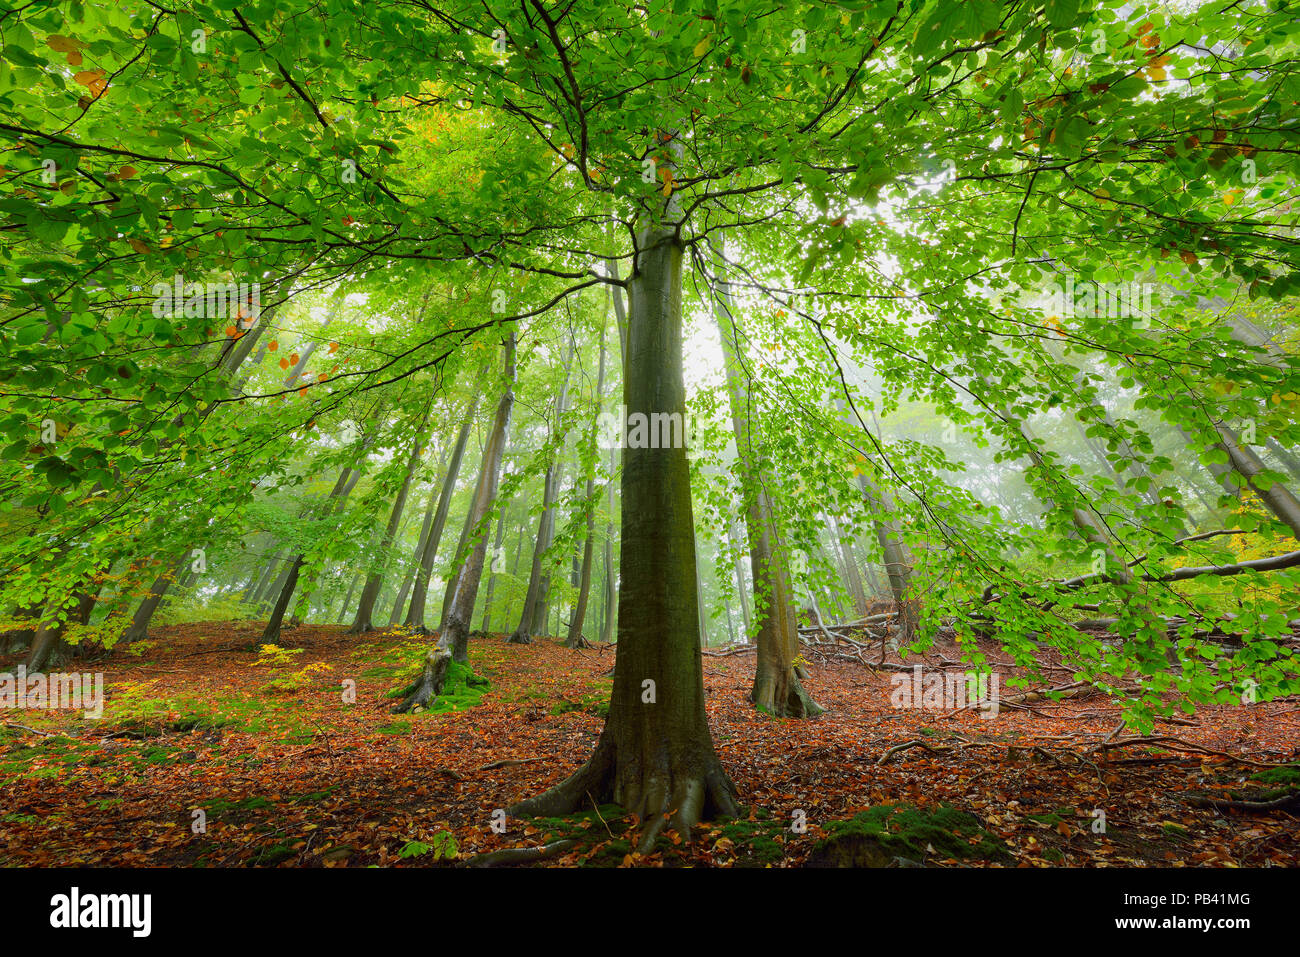 European beech tree (Fagus sylvatica). in woodland, Serrahn, Muritz-National Park, World Natural Heritage site, Germany, Europe. October 2015. Stock Photo